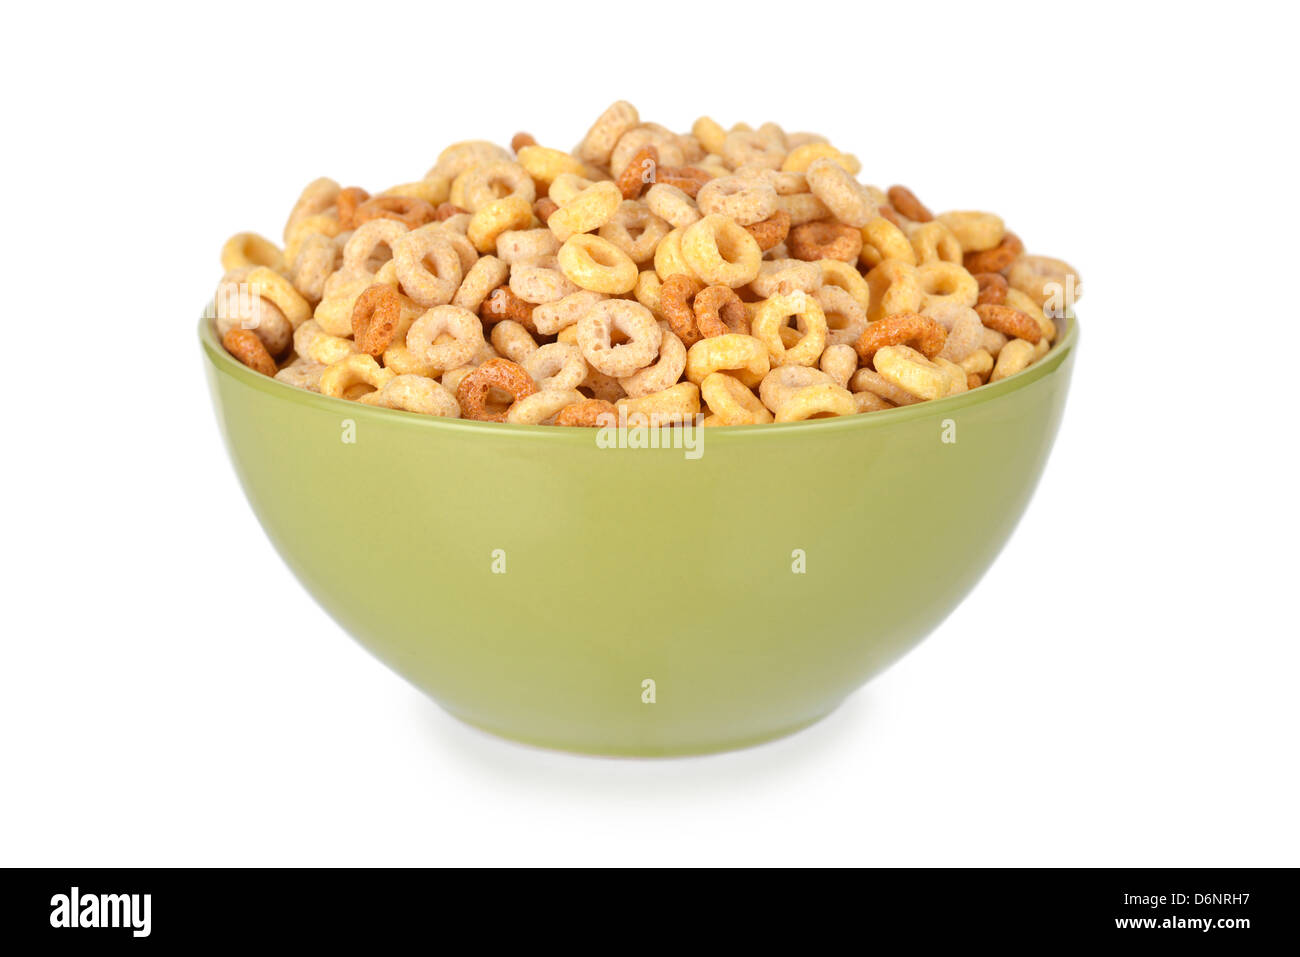 Schüssel mit Cheerios Cerealien, kalte Frühstückszerealien Stockfoto